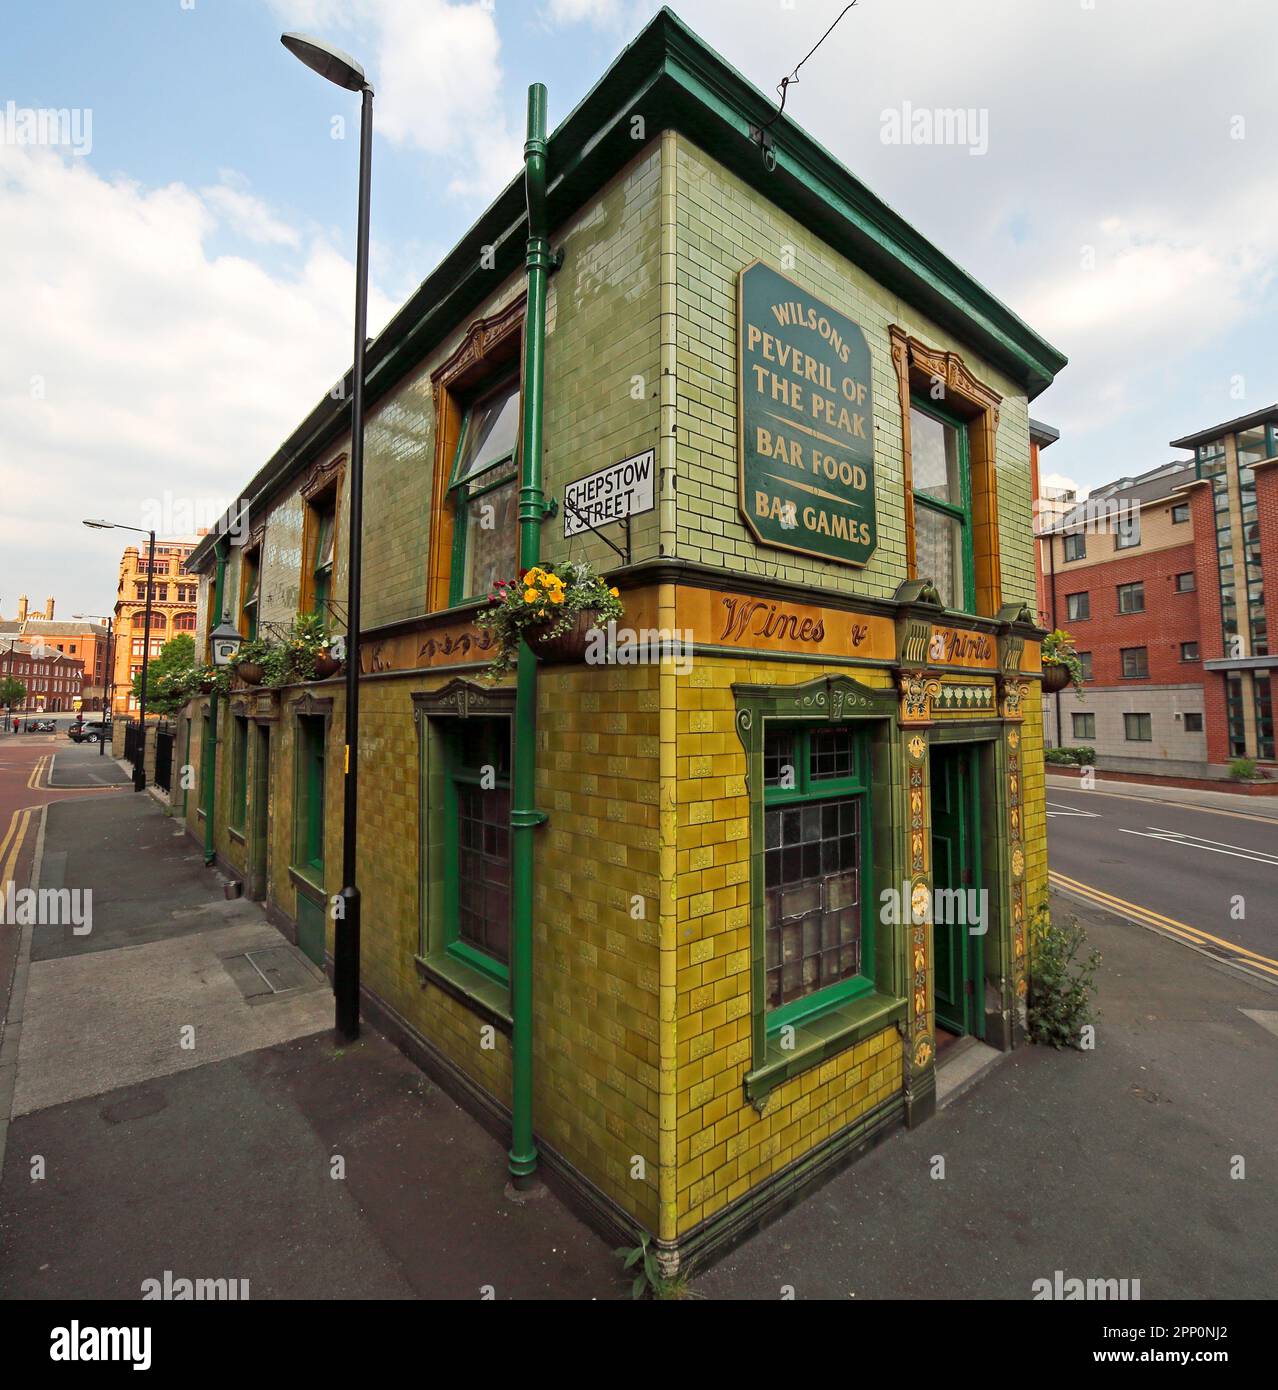 Peveril of the Peak, pub en carrelage vert victorien, 127 Great Bridgewater Street, Manchester, Angleterre, Royaume-Uni, M1 5JQ Banque D'Images